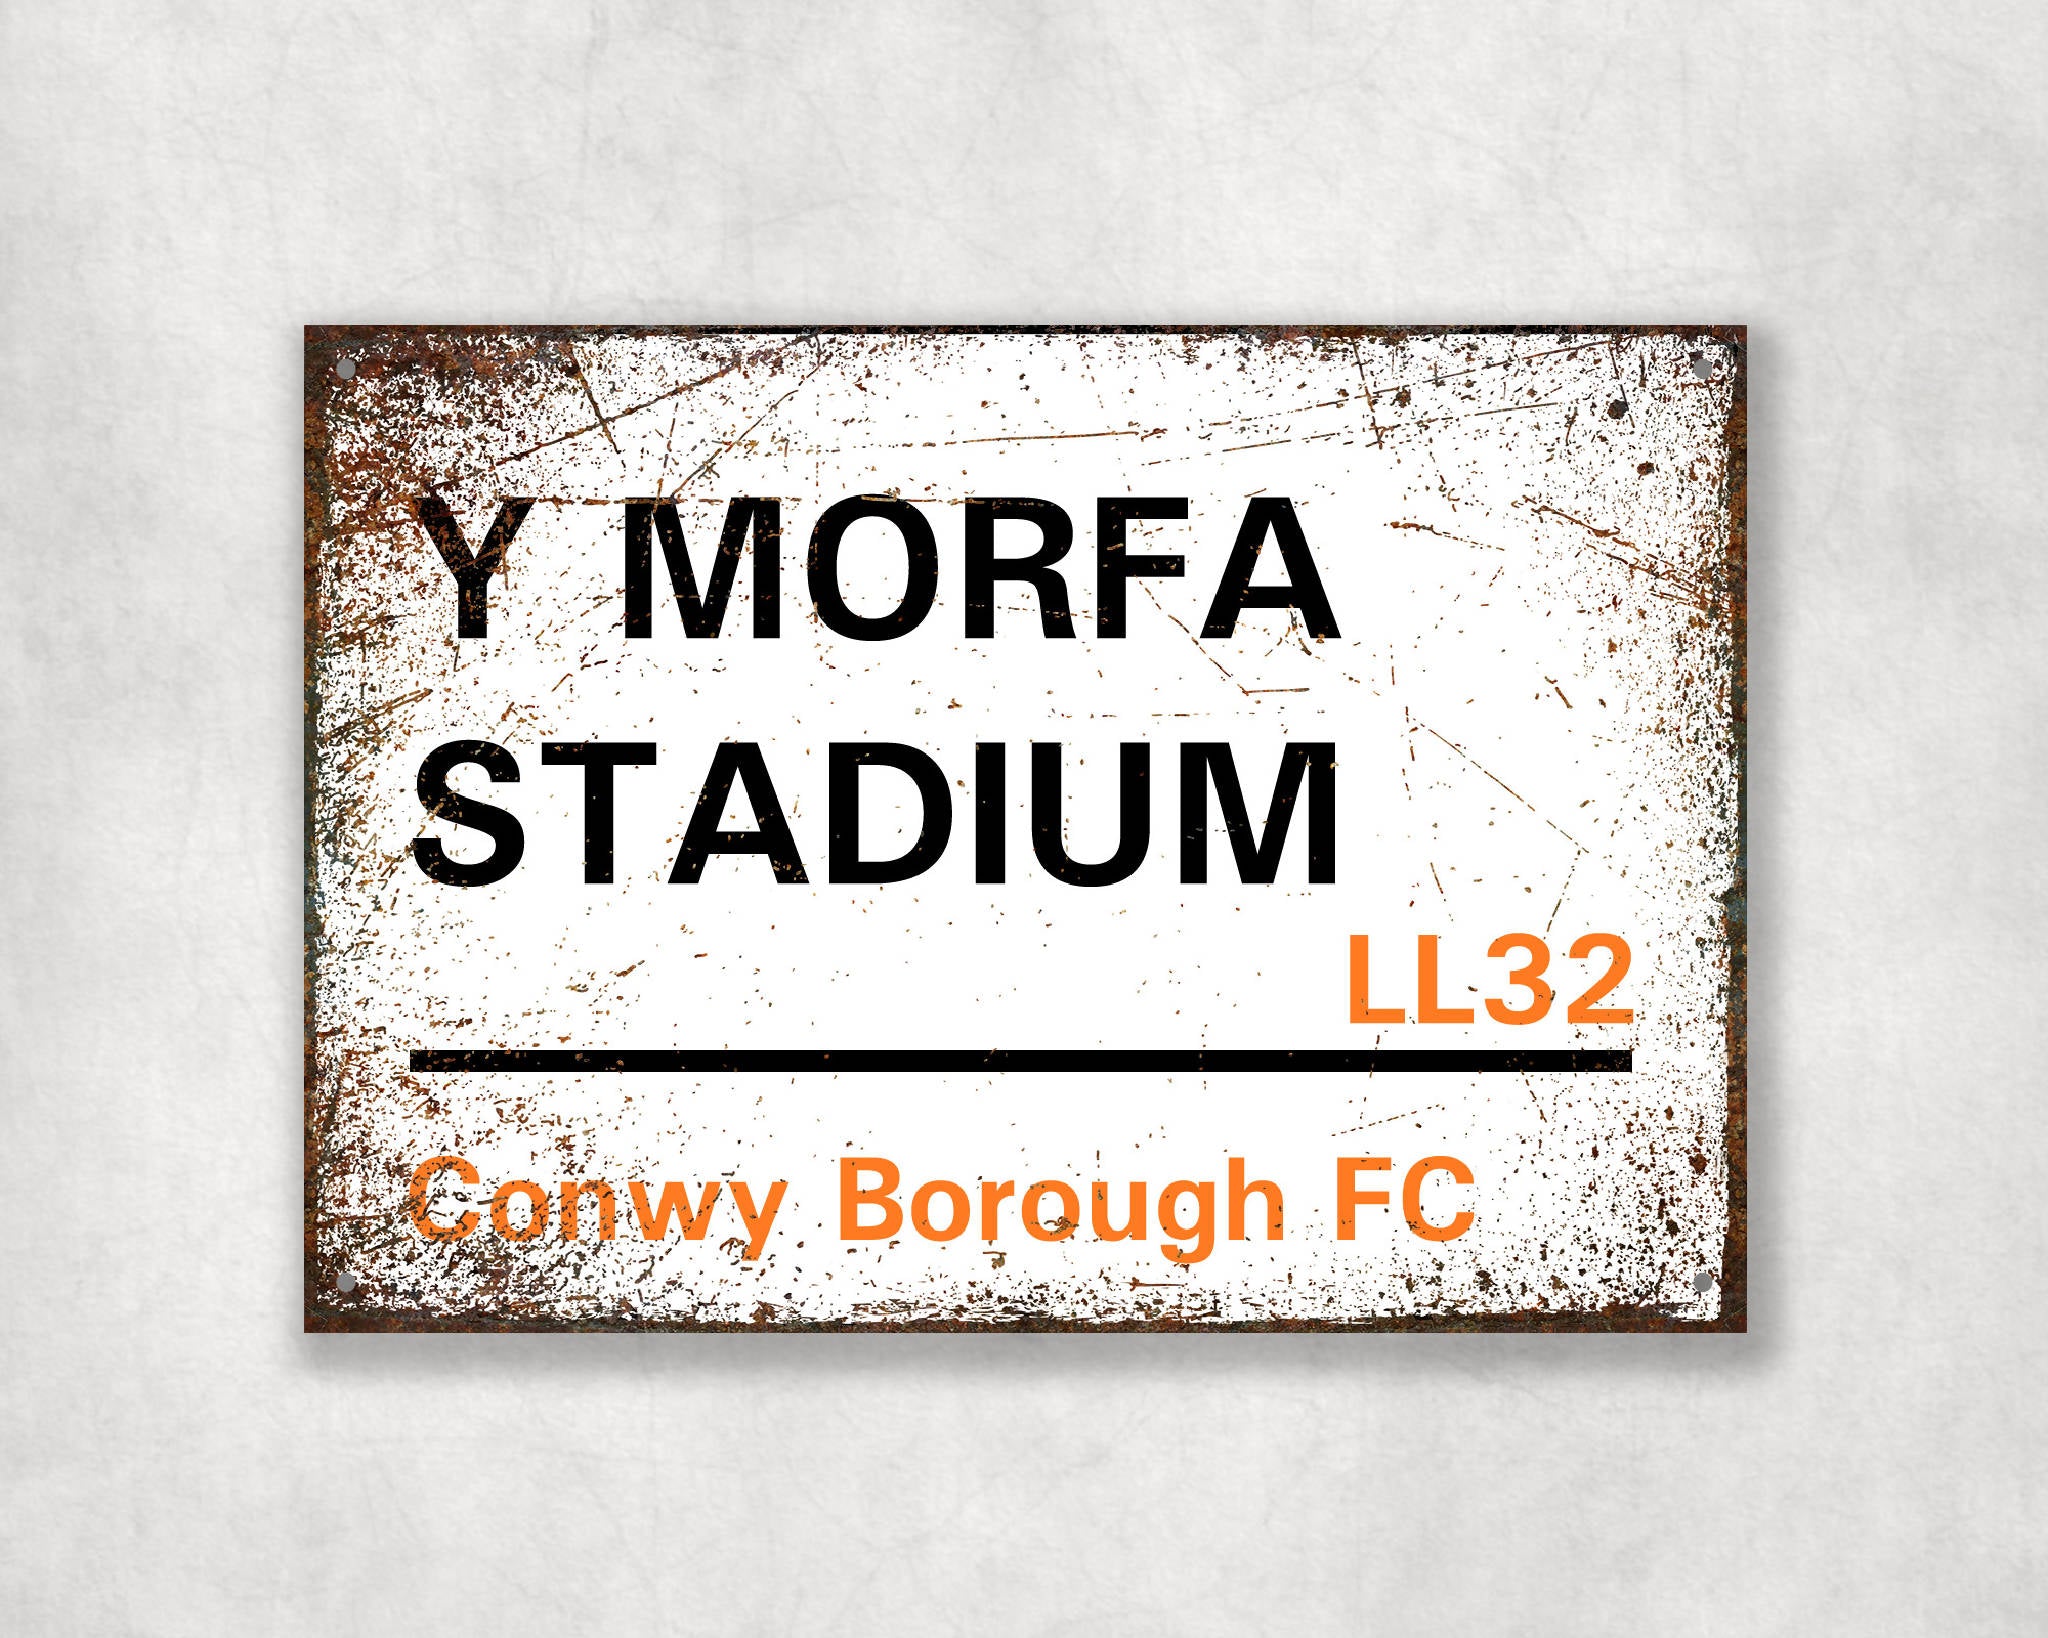 Y Morfa Stadium - Conwy Borough FC aluminium printed metal street sign - gift, keepsake, football gift